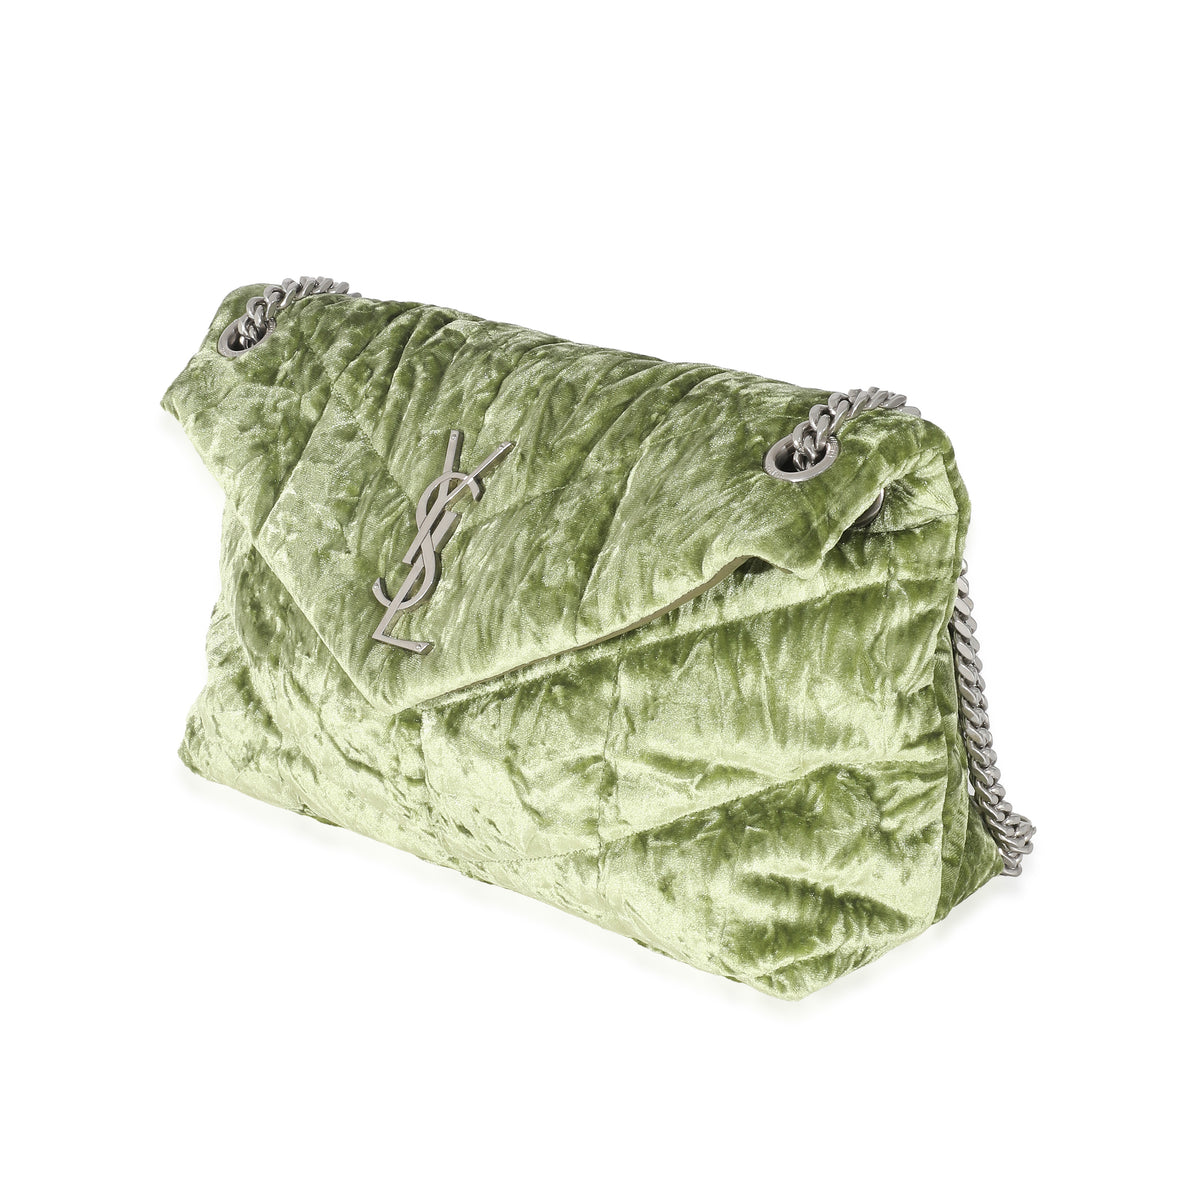 Saint Laurent Small Puffer Crushed Velvet Shoulder Bag - Emerald/Vert